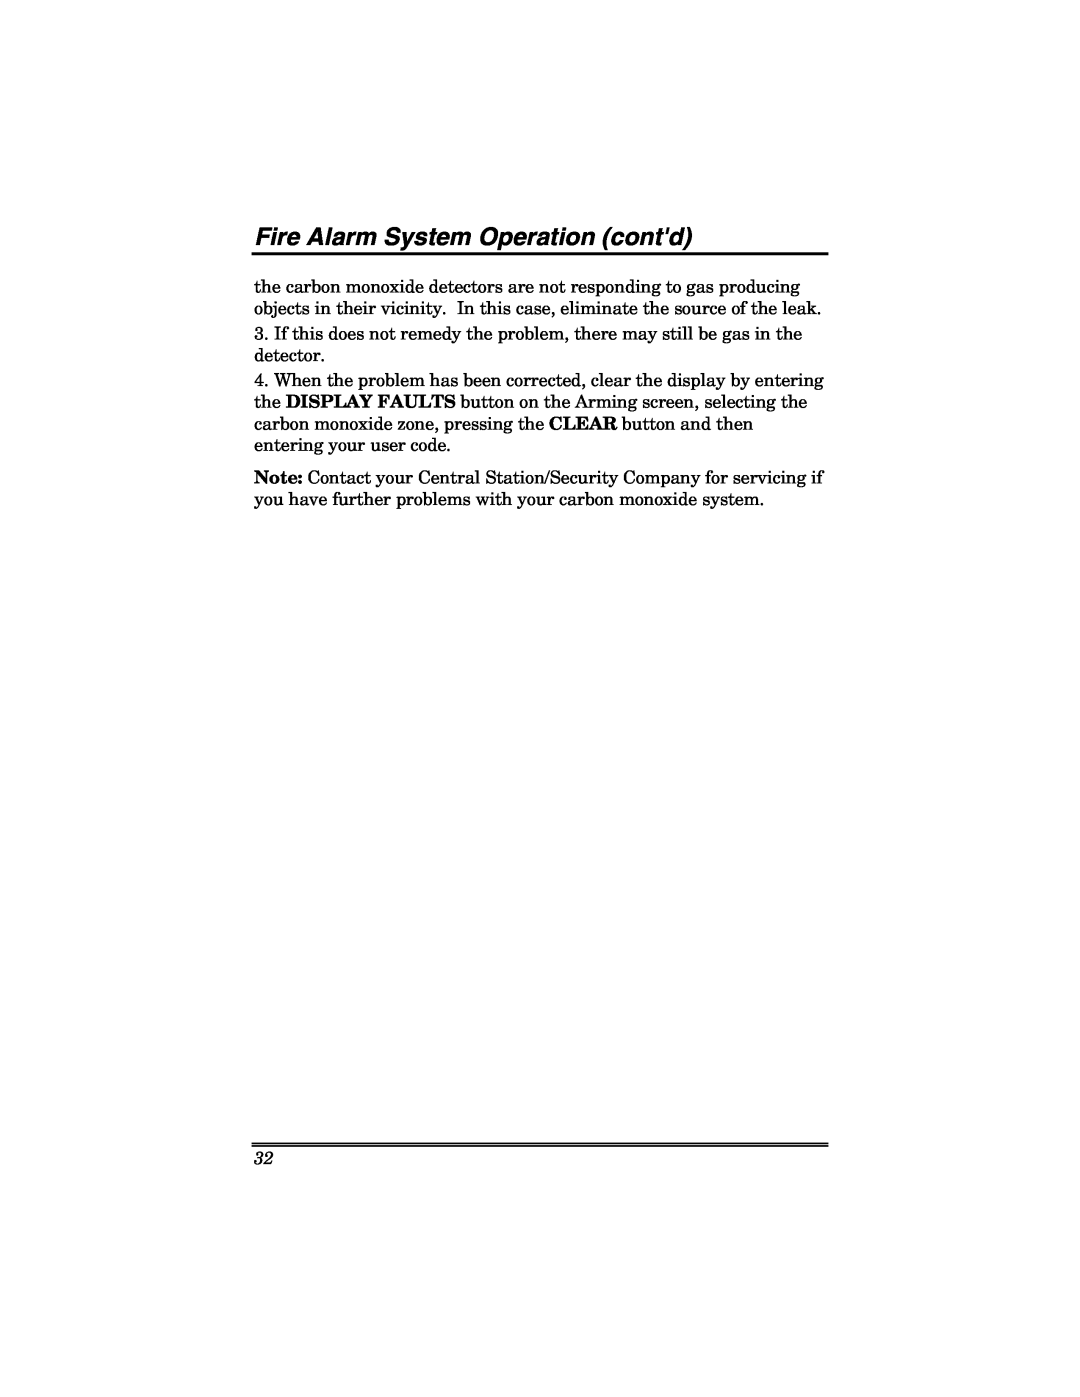 Honeywell 6271 manual Fire Alarm System Operation contd 